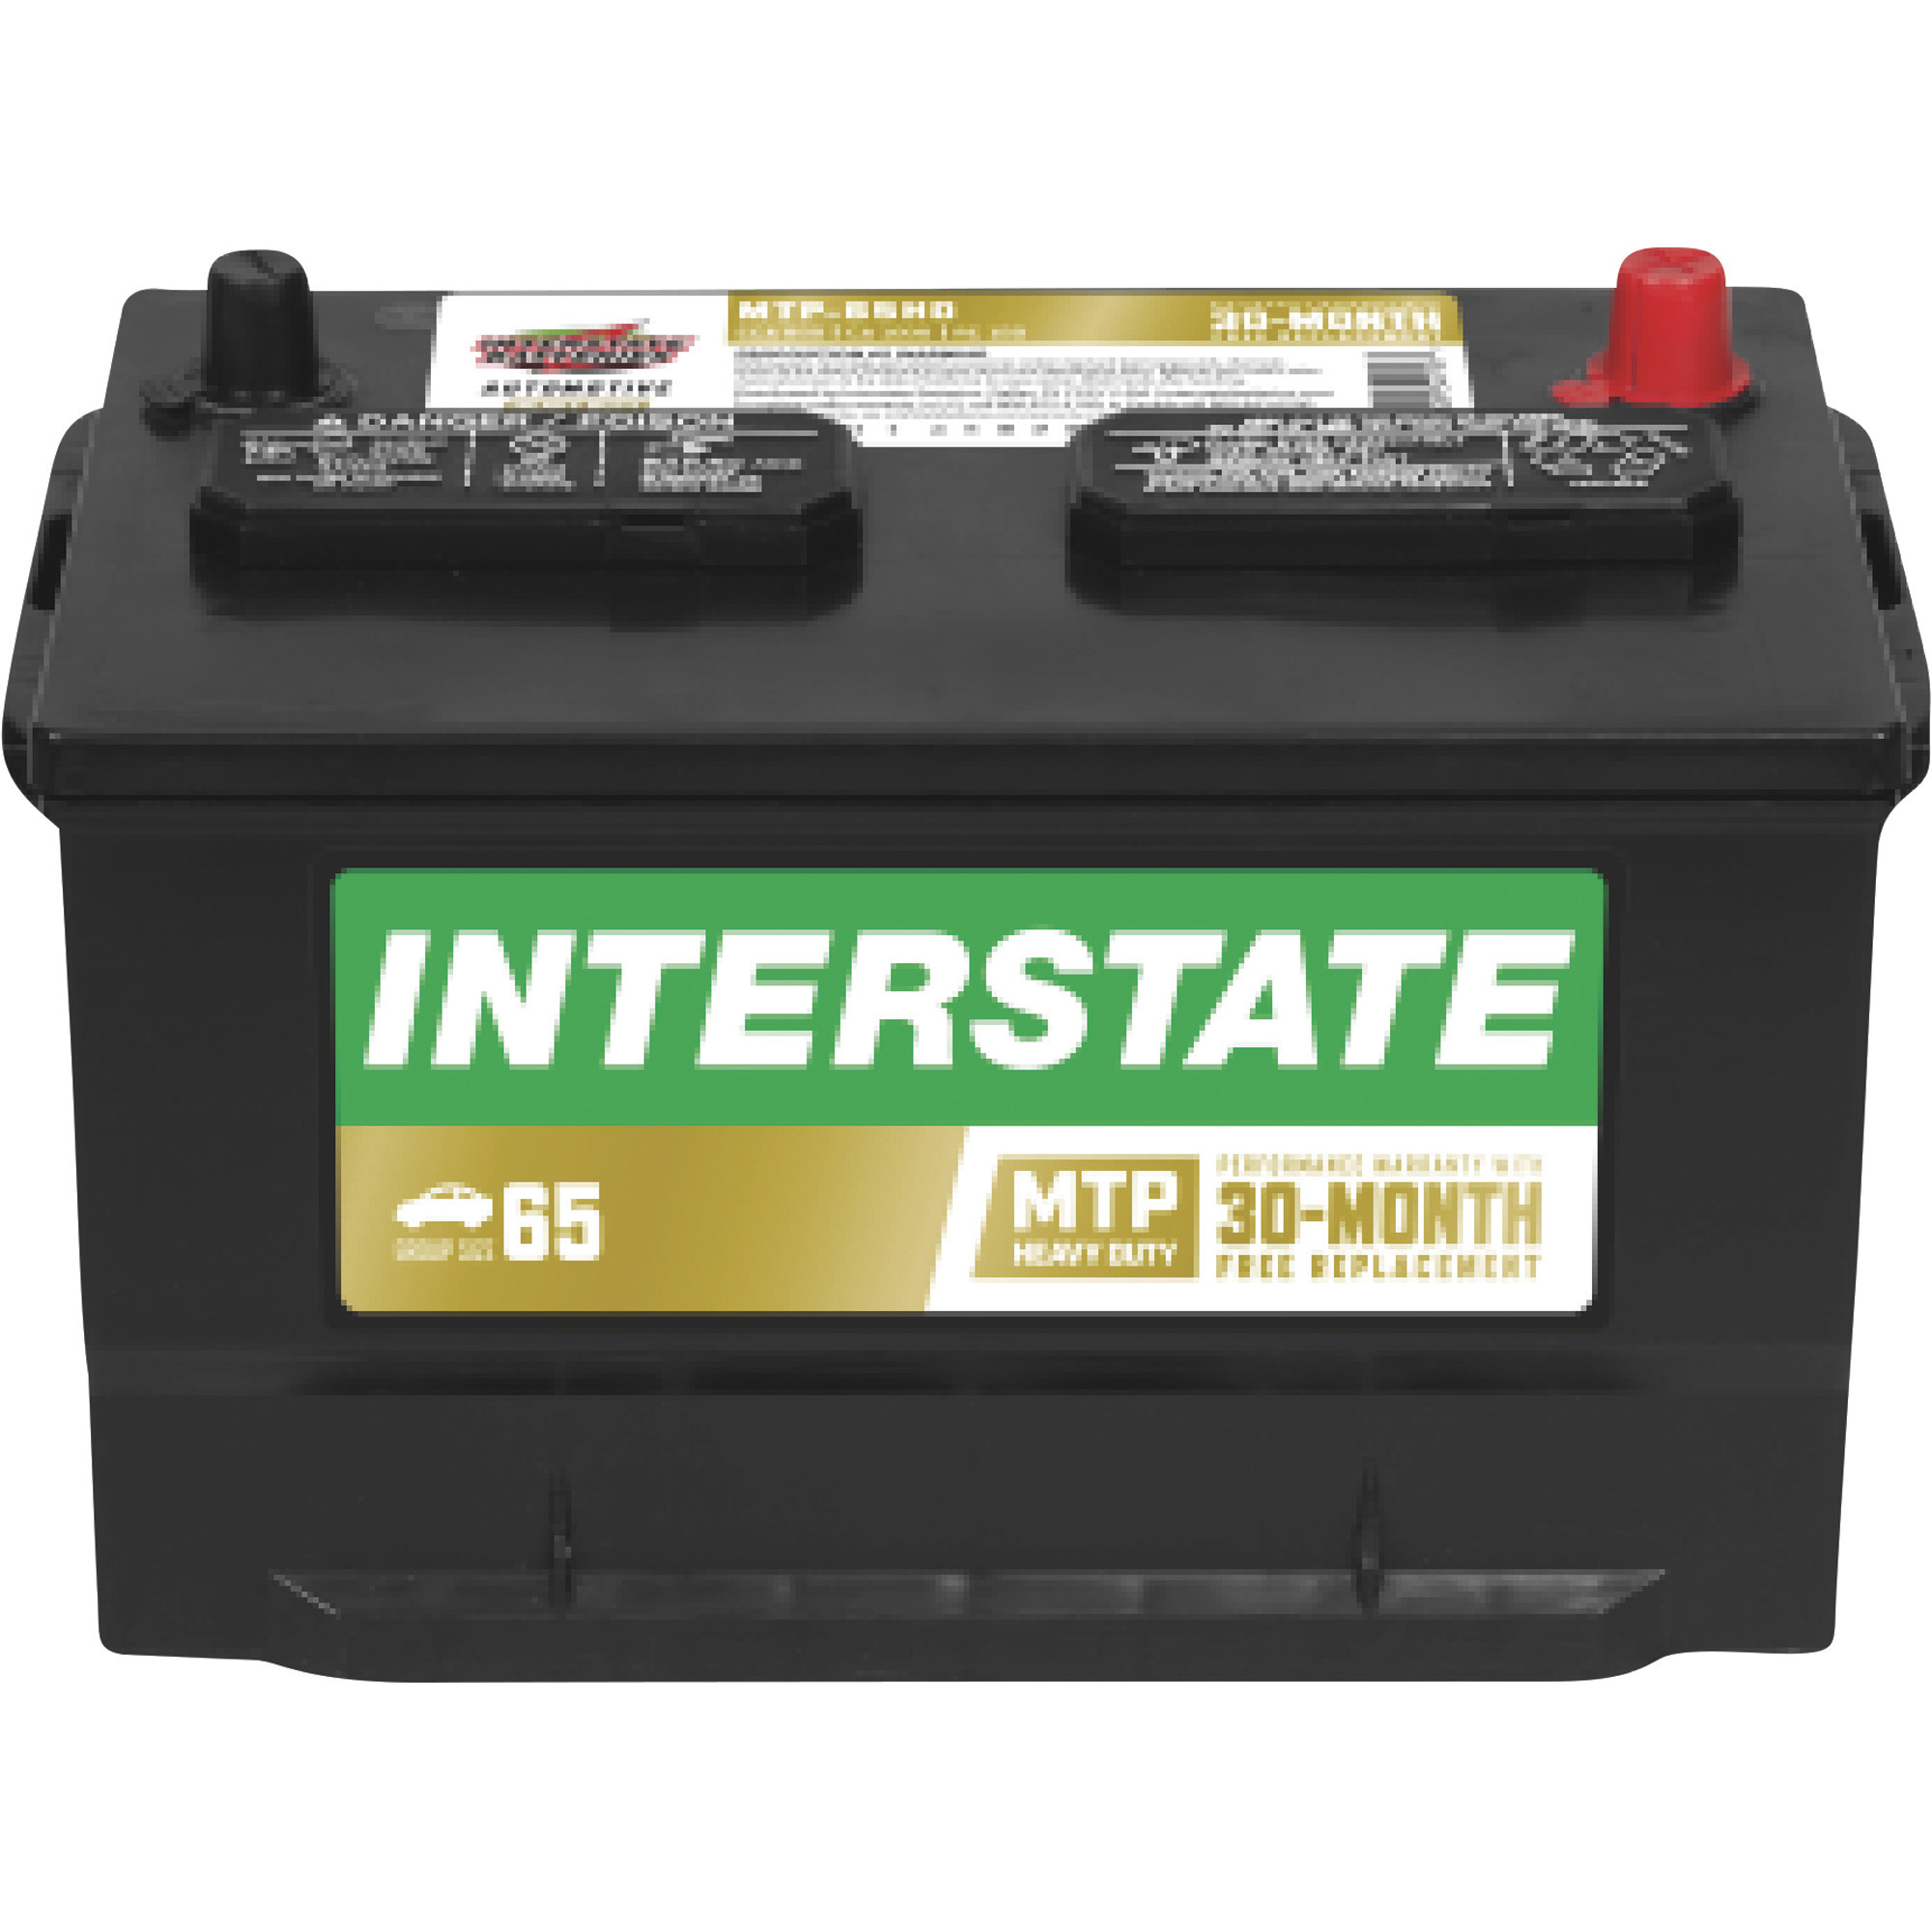 Interstate Batteries Automotive Battery, Group Size 65, 12 Volt, Sealed Lead Acid, Model MTP-65HD